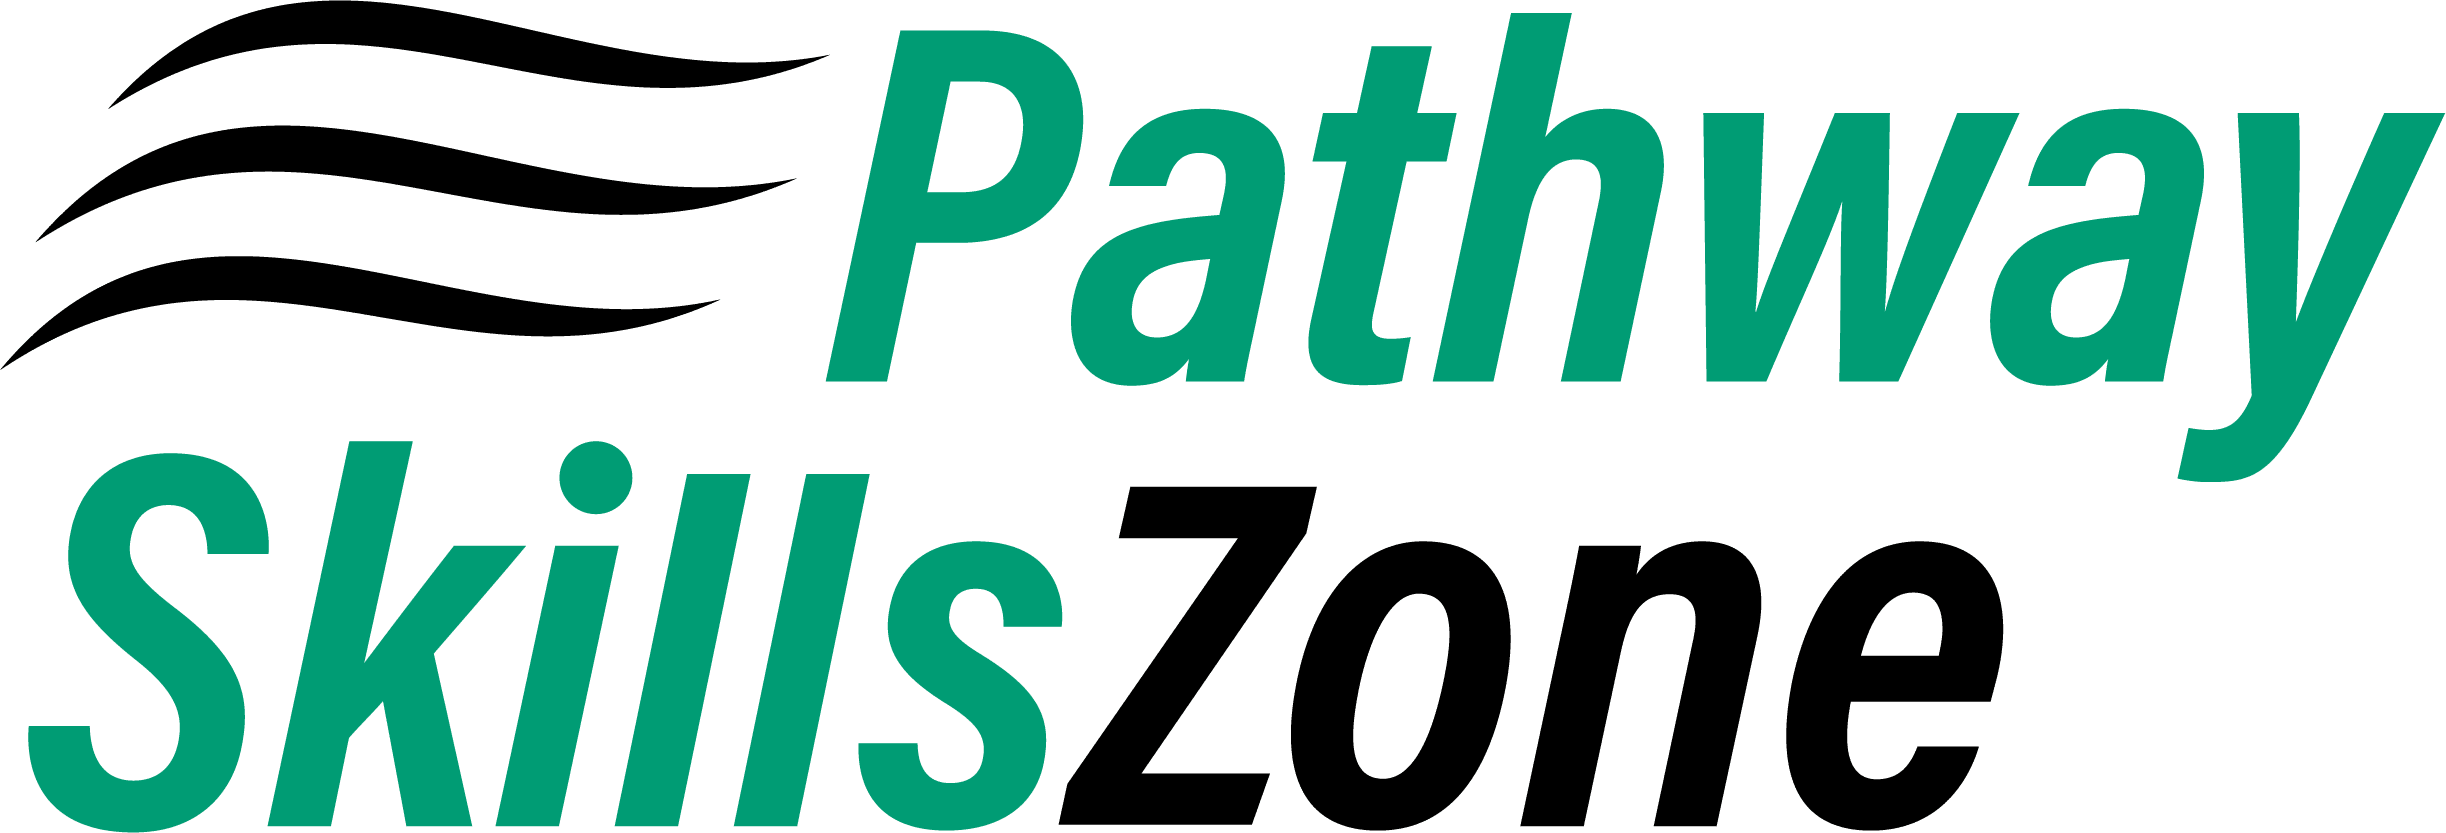 Pathway SkillsZone